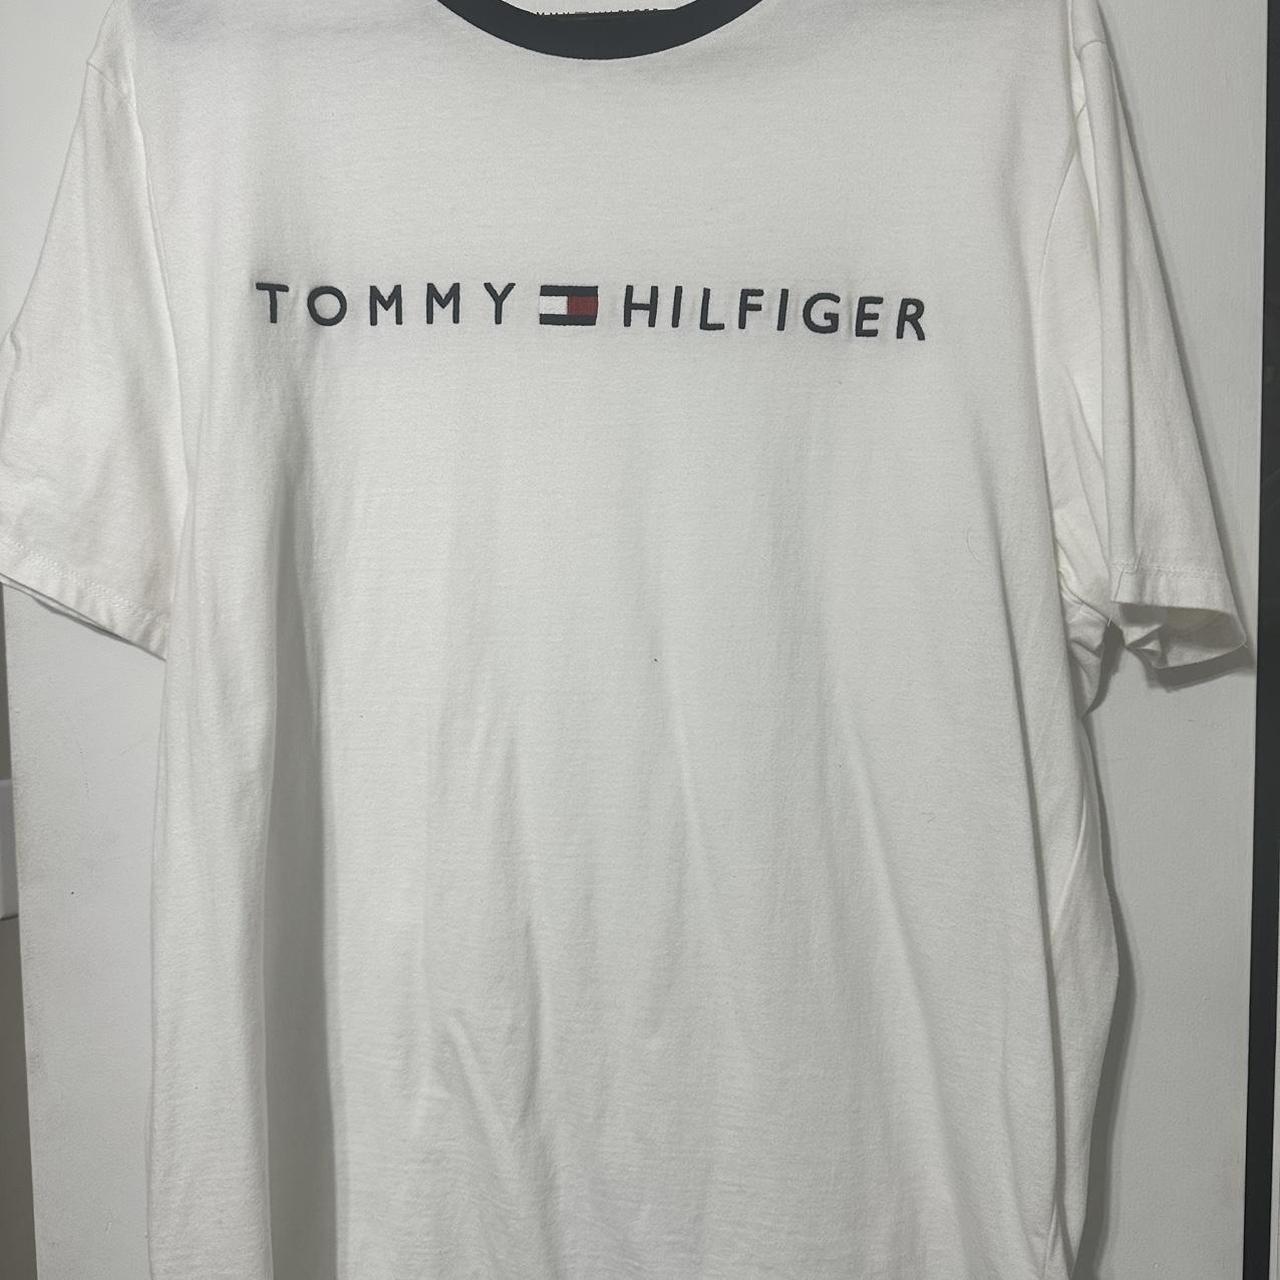 Tommy Hilfiger Men's White T-shirt